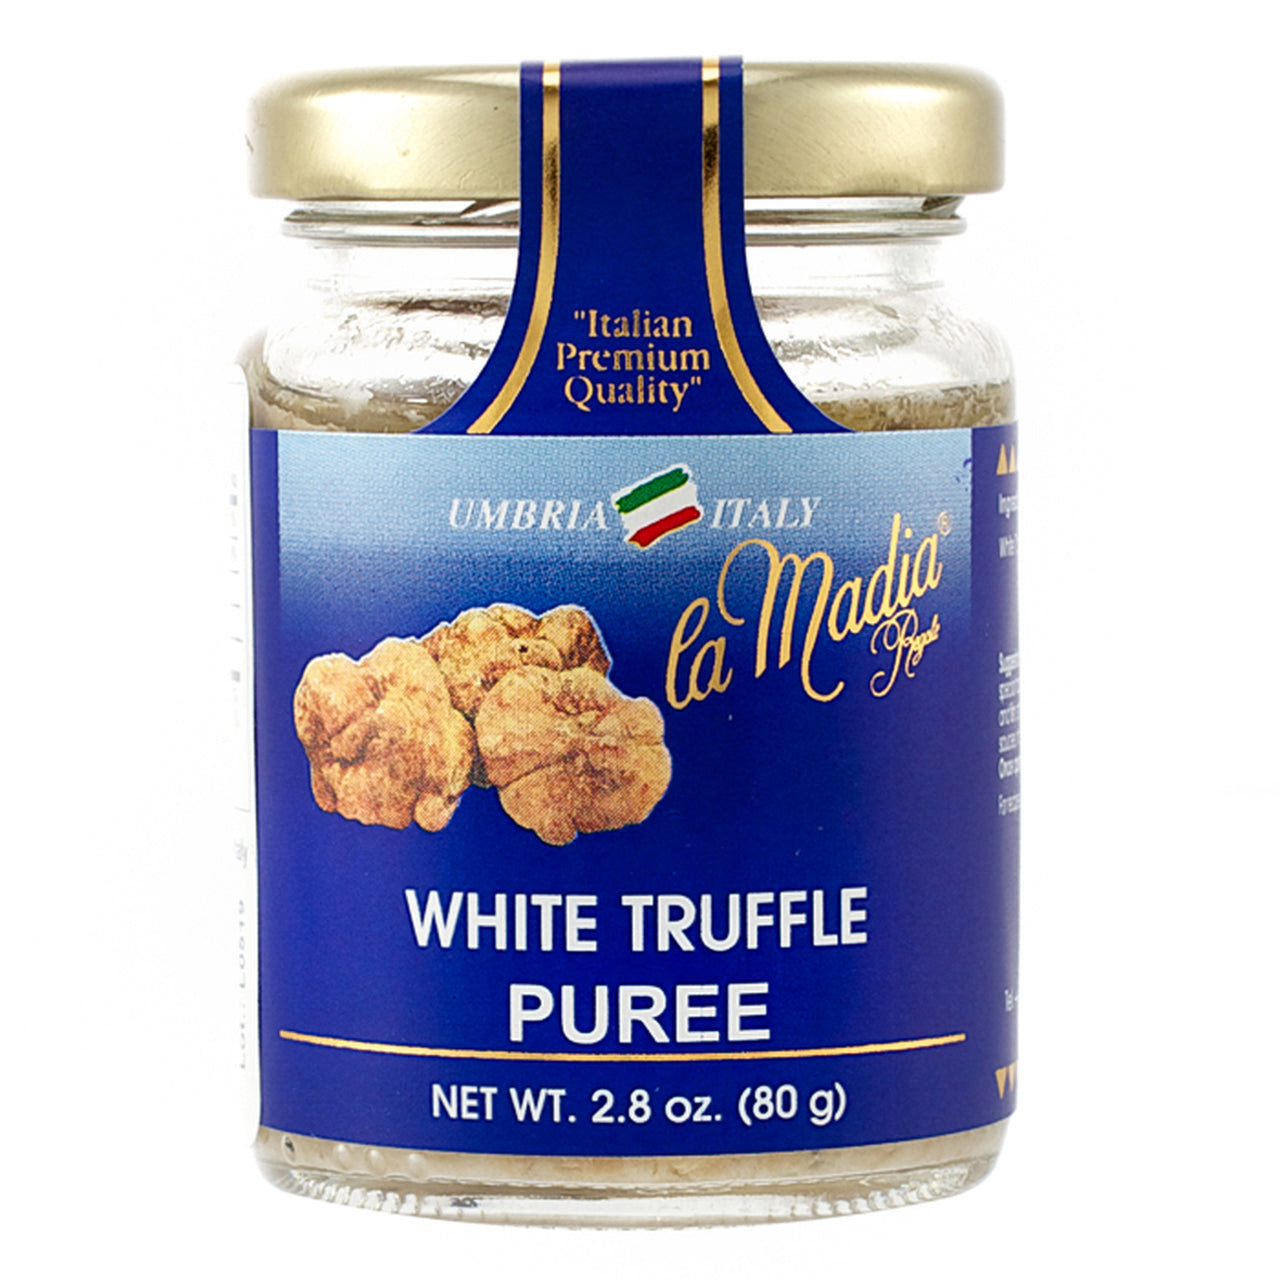 La Madia White Truffle Puree